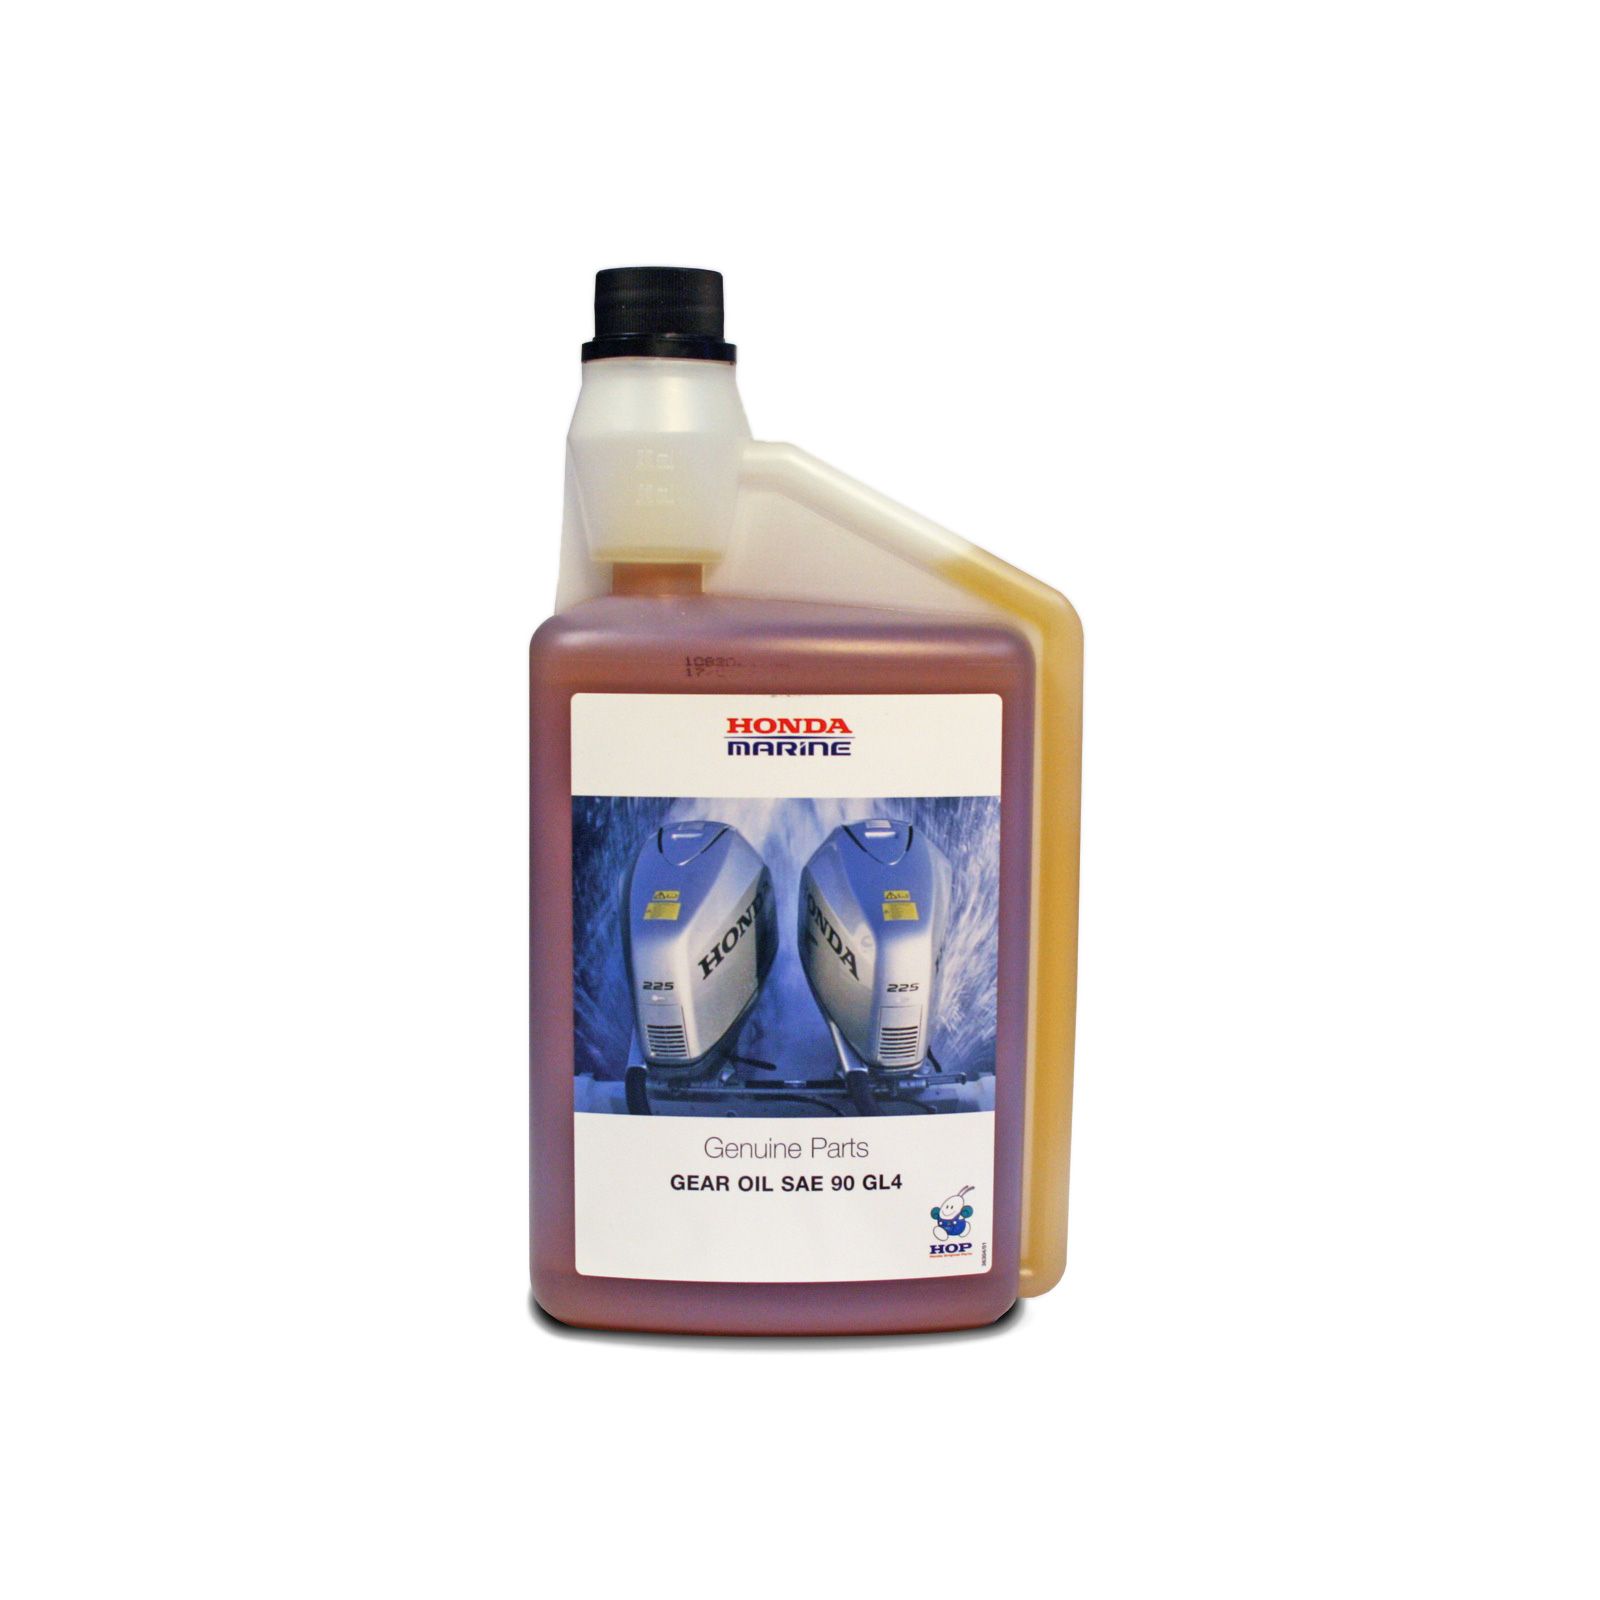 Морское масло для зубчатых передач — SAE 90 GL4, 1 литр